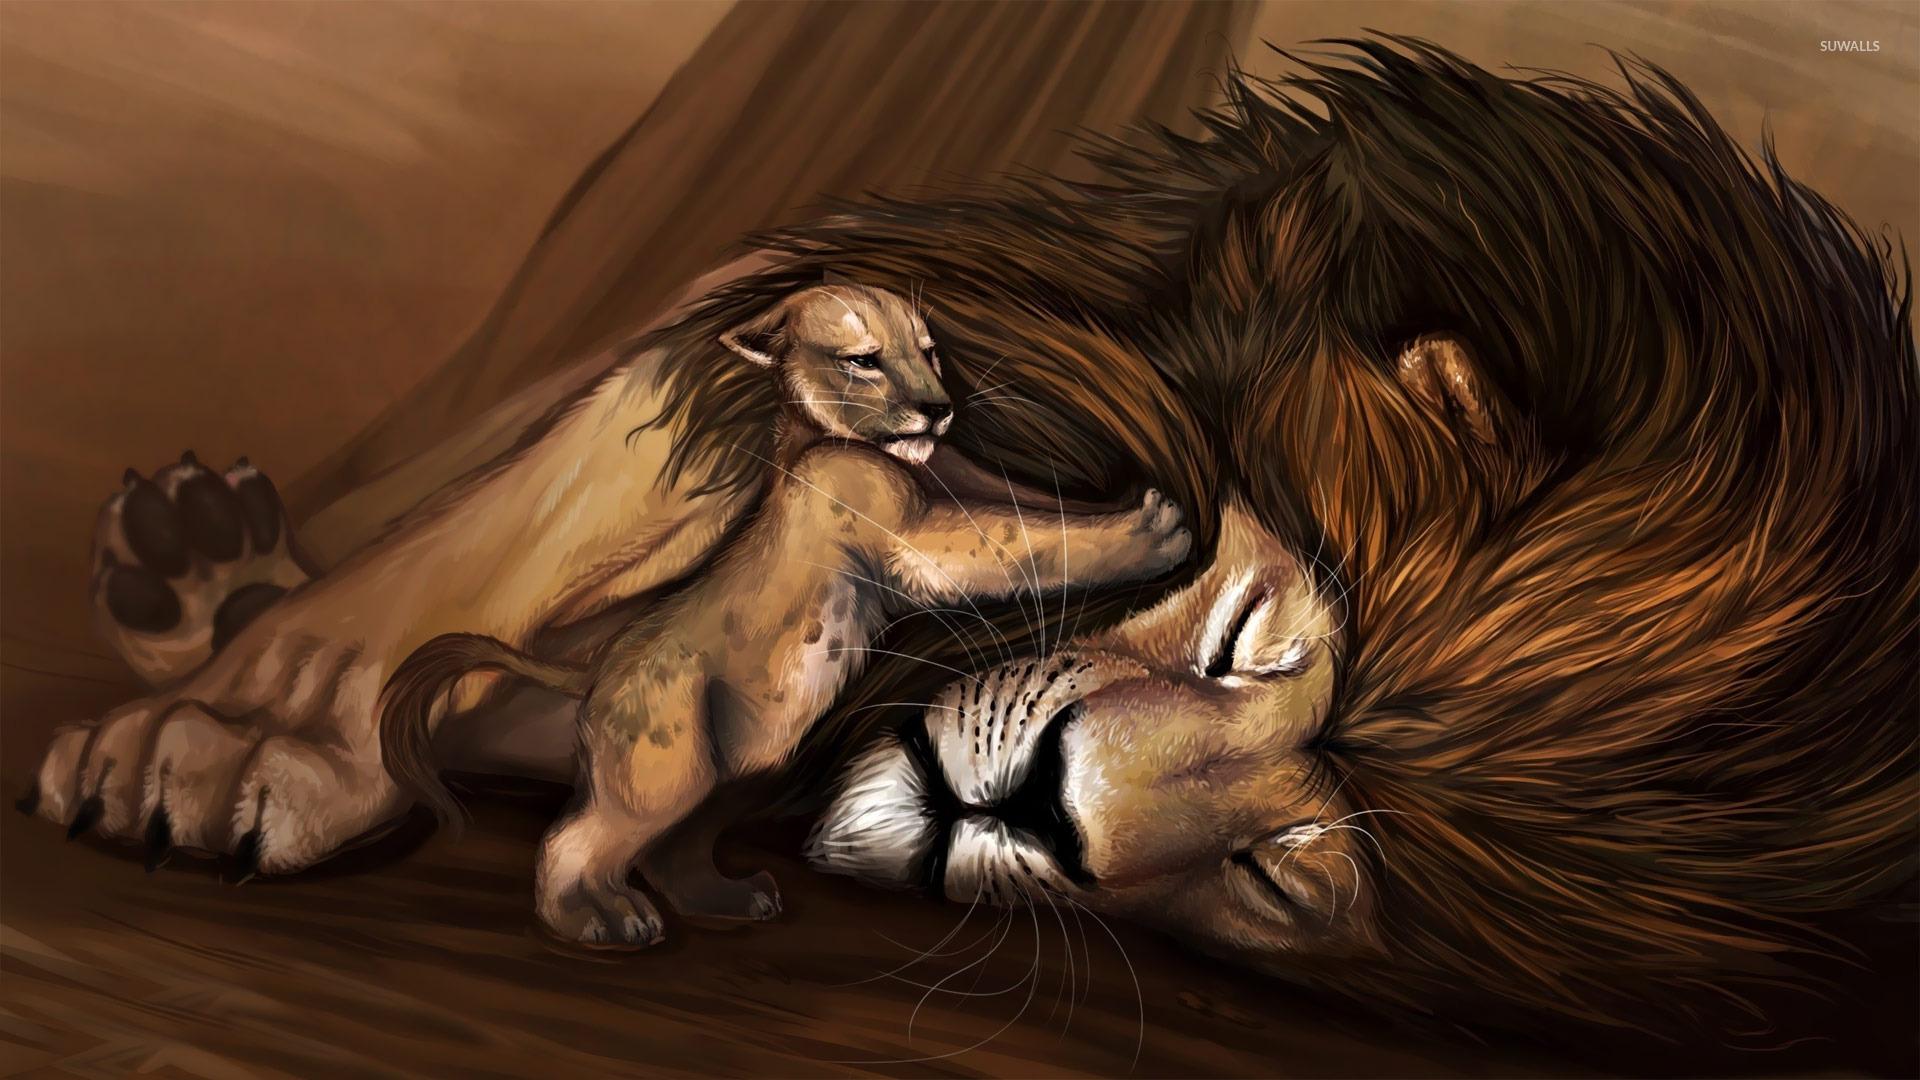 Cub waking up lion wallpaper wallpaper